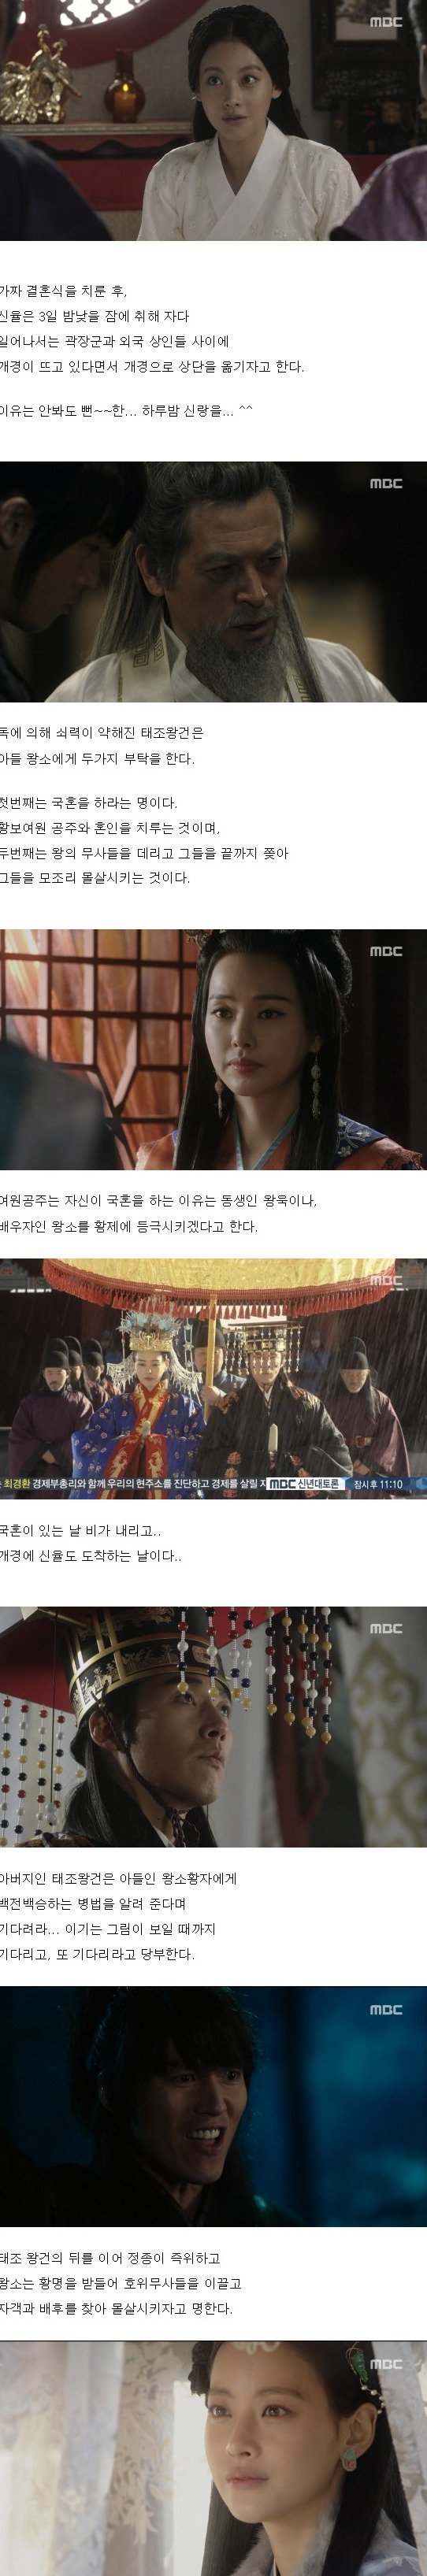 episode 2 captures for the Korean drama 'Shine or Go Crazy'